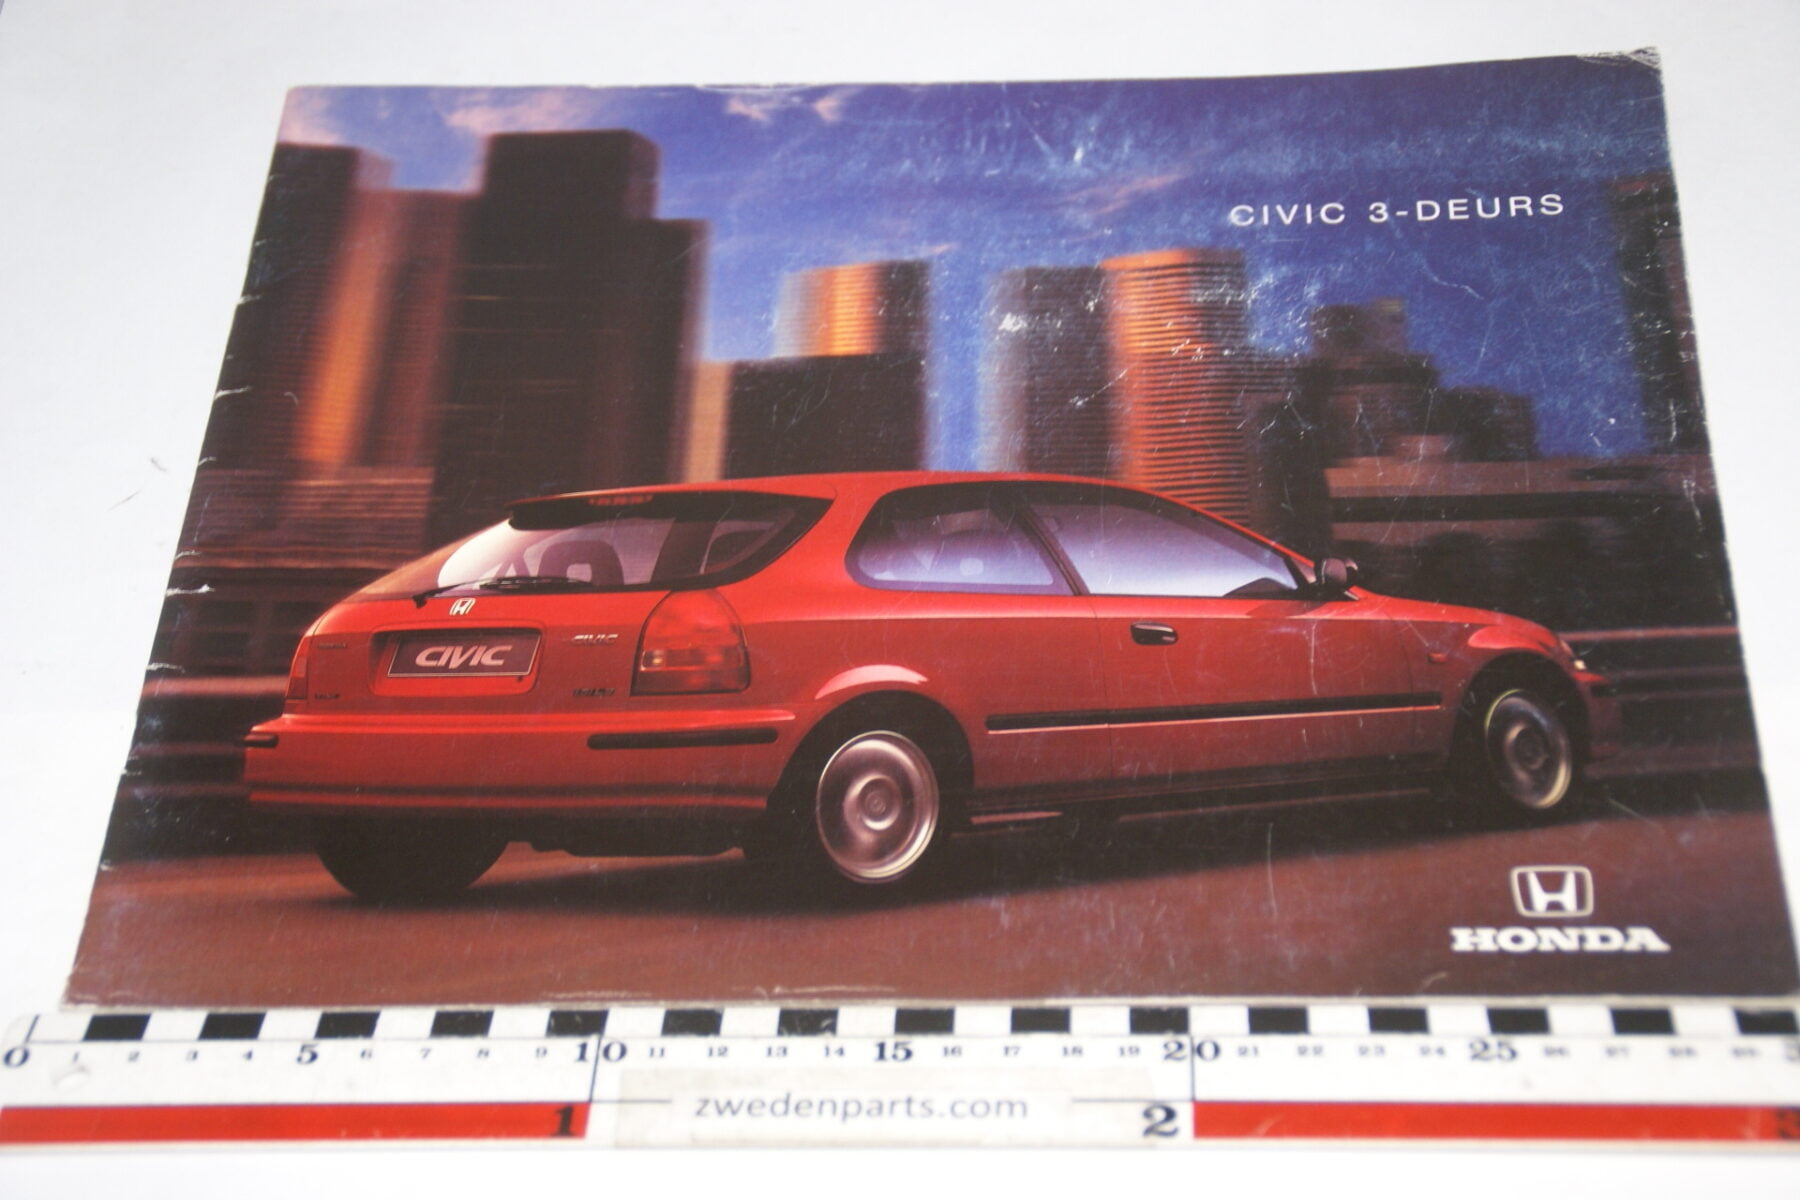 DSC08405 originele brochure Honda Civic 3-deurs-9d570d04